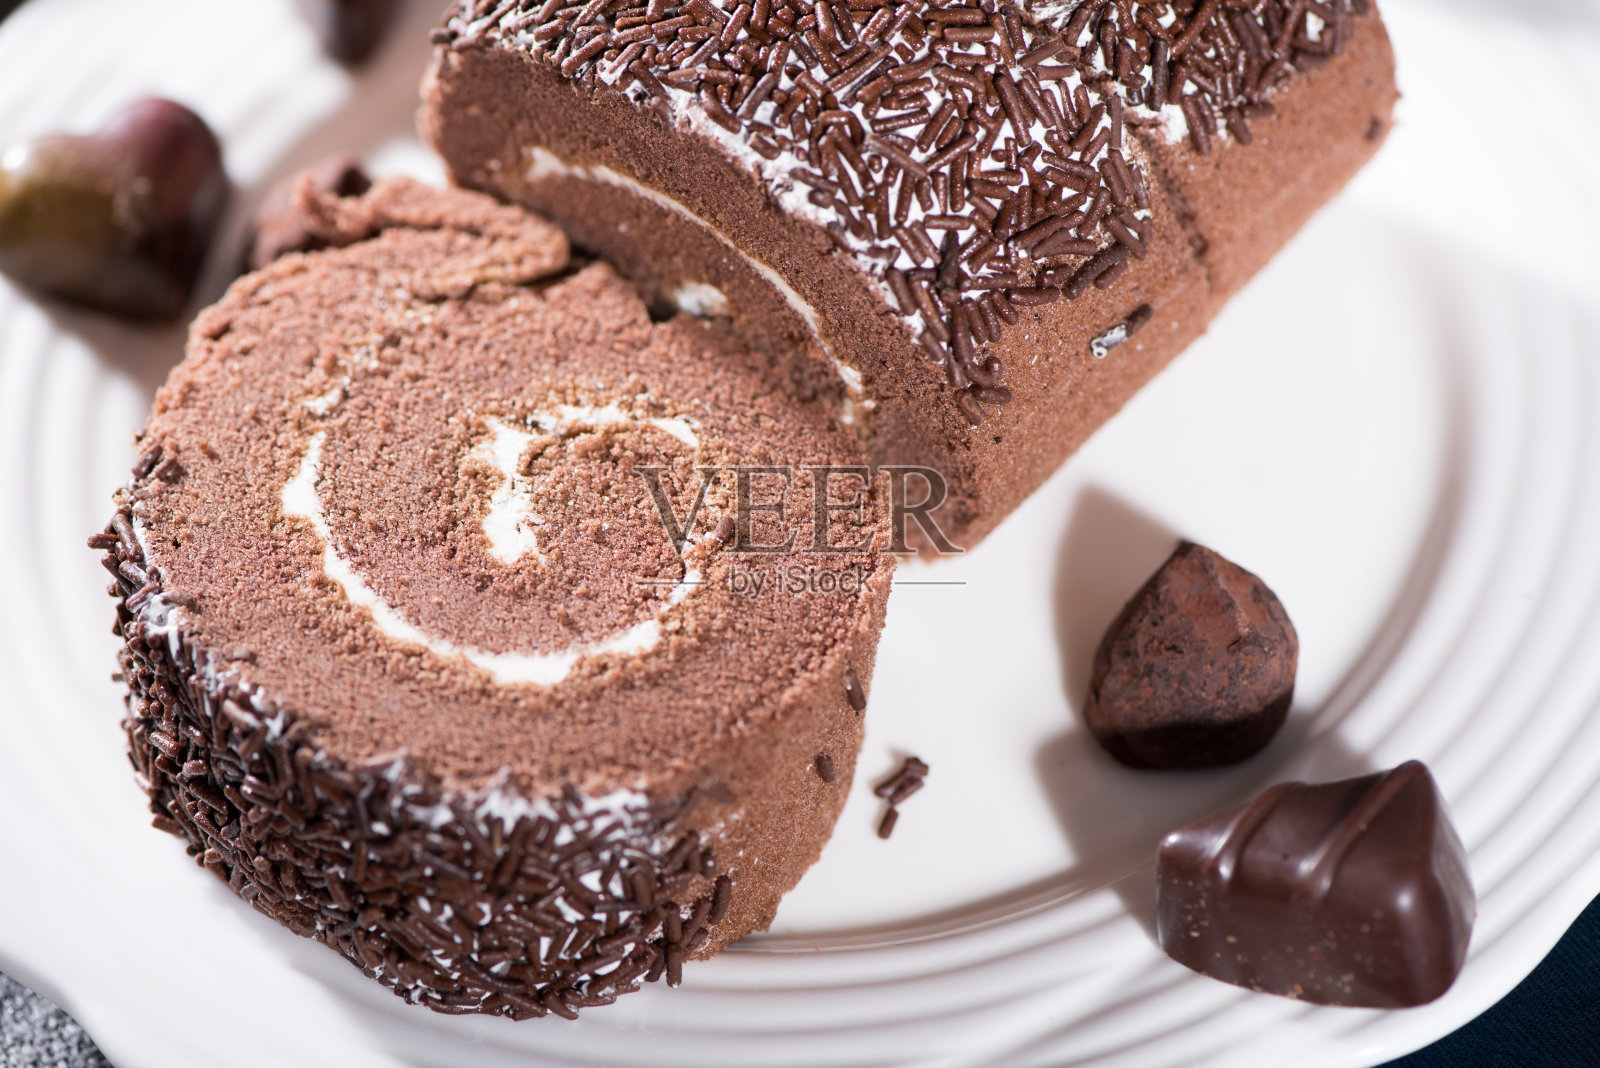 Schwarzwald蛋糕和巧克力。照片摄影图片